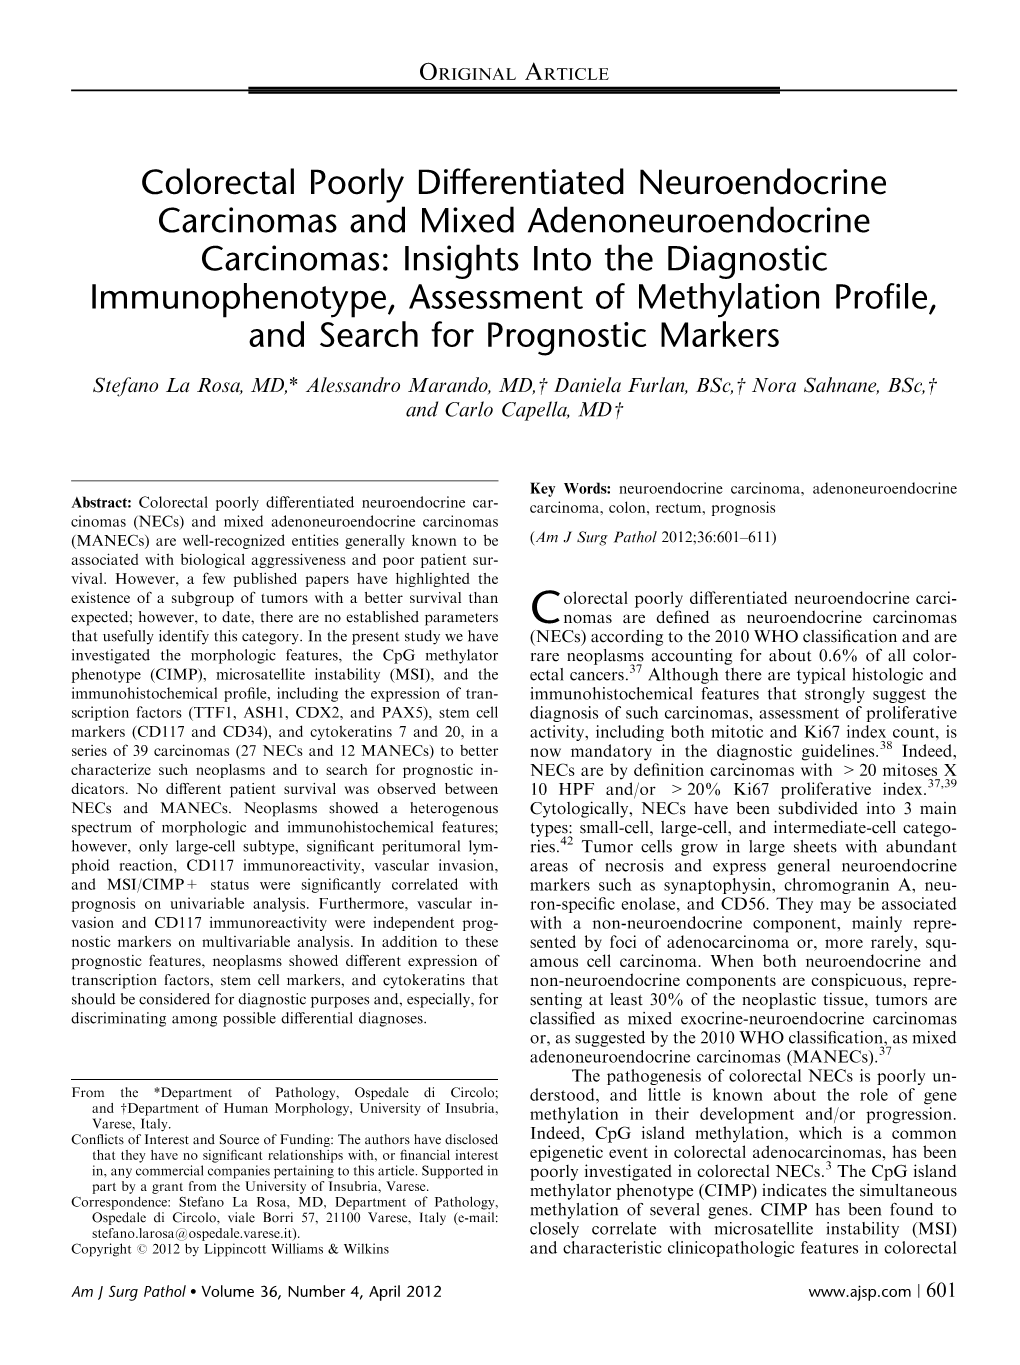 Colorectal Mixed Adenoneuroendocrine Carcinomas